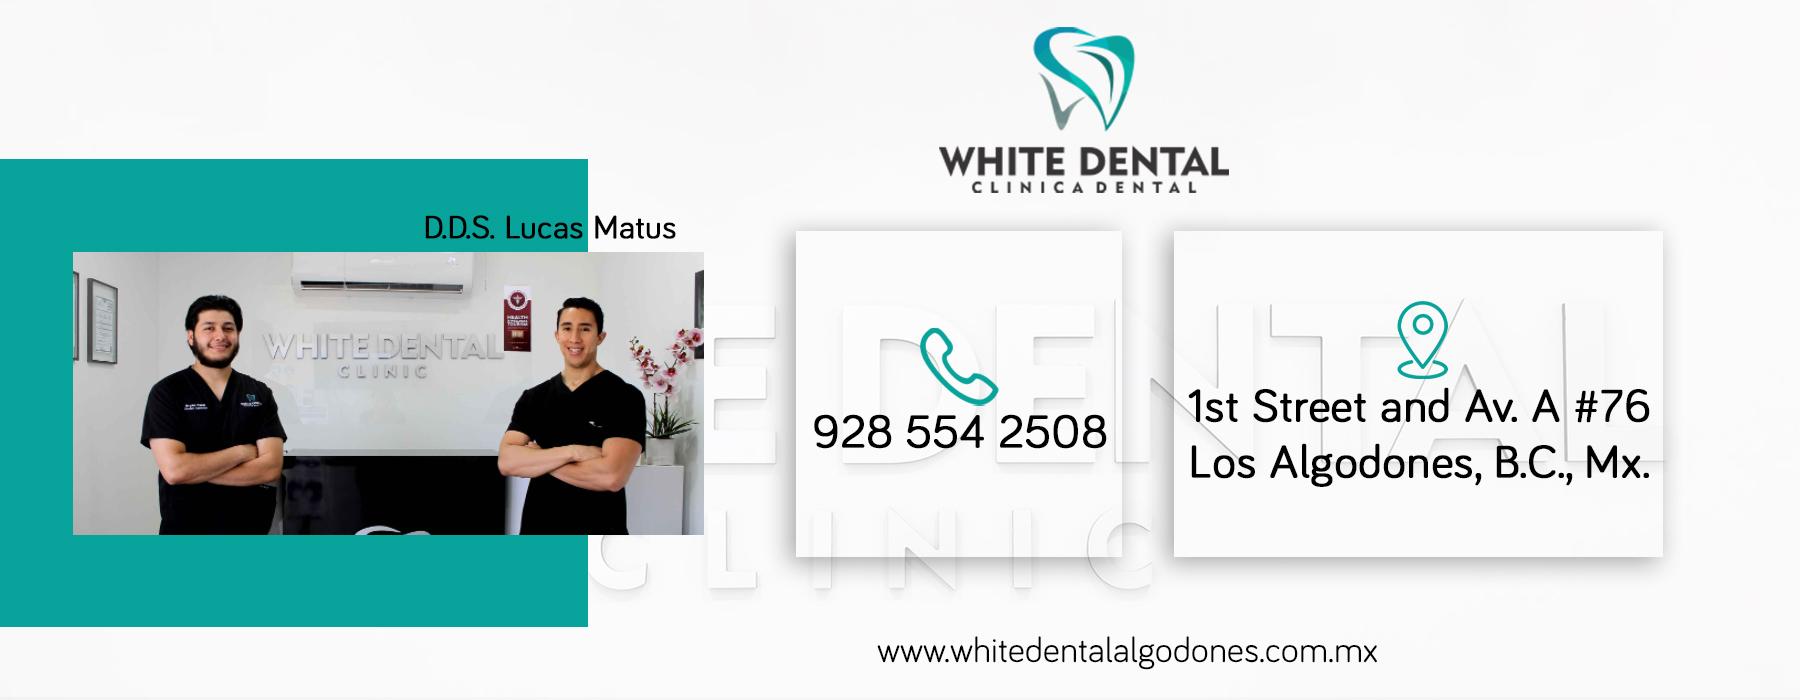  White Dental Clinic